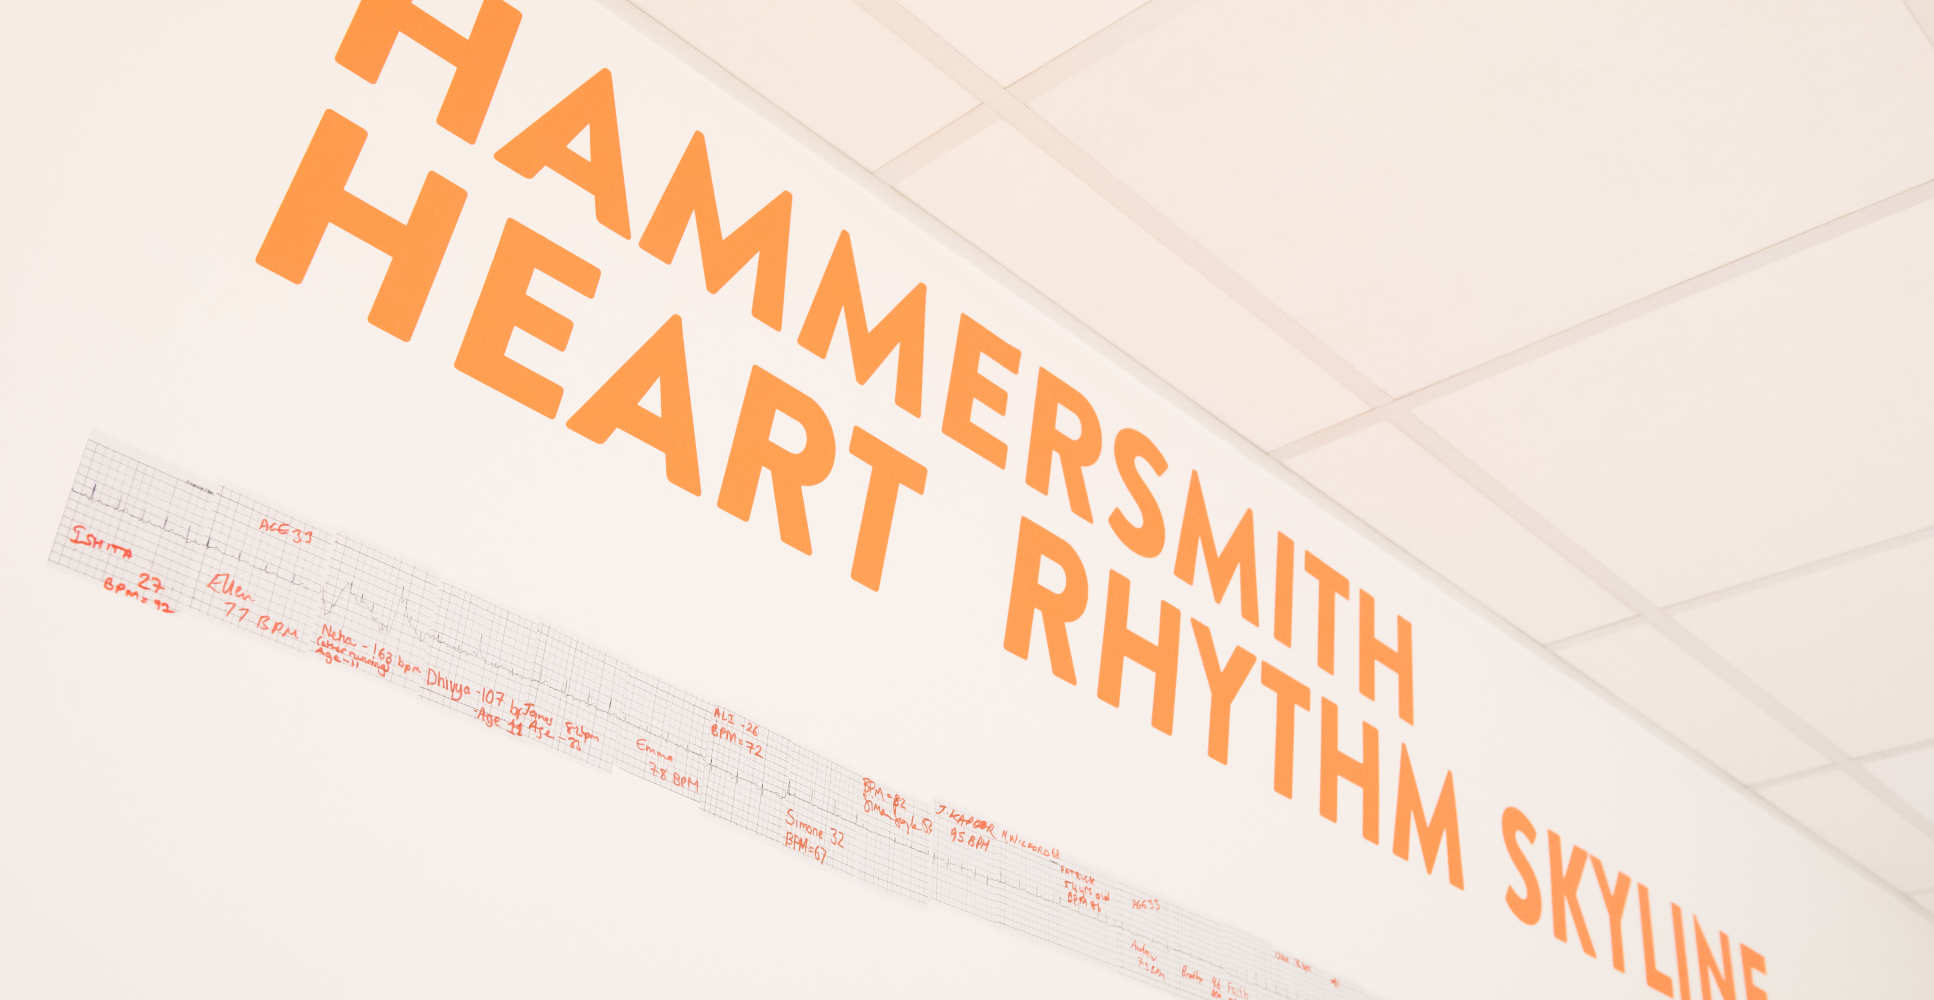 Hammersmith Heart Rhythm Skyline